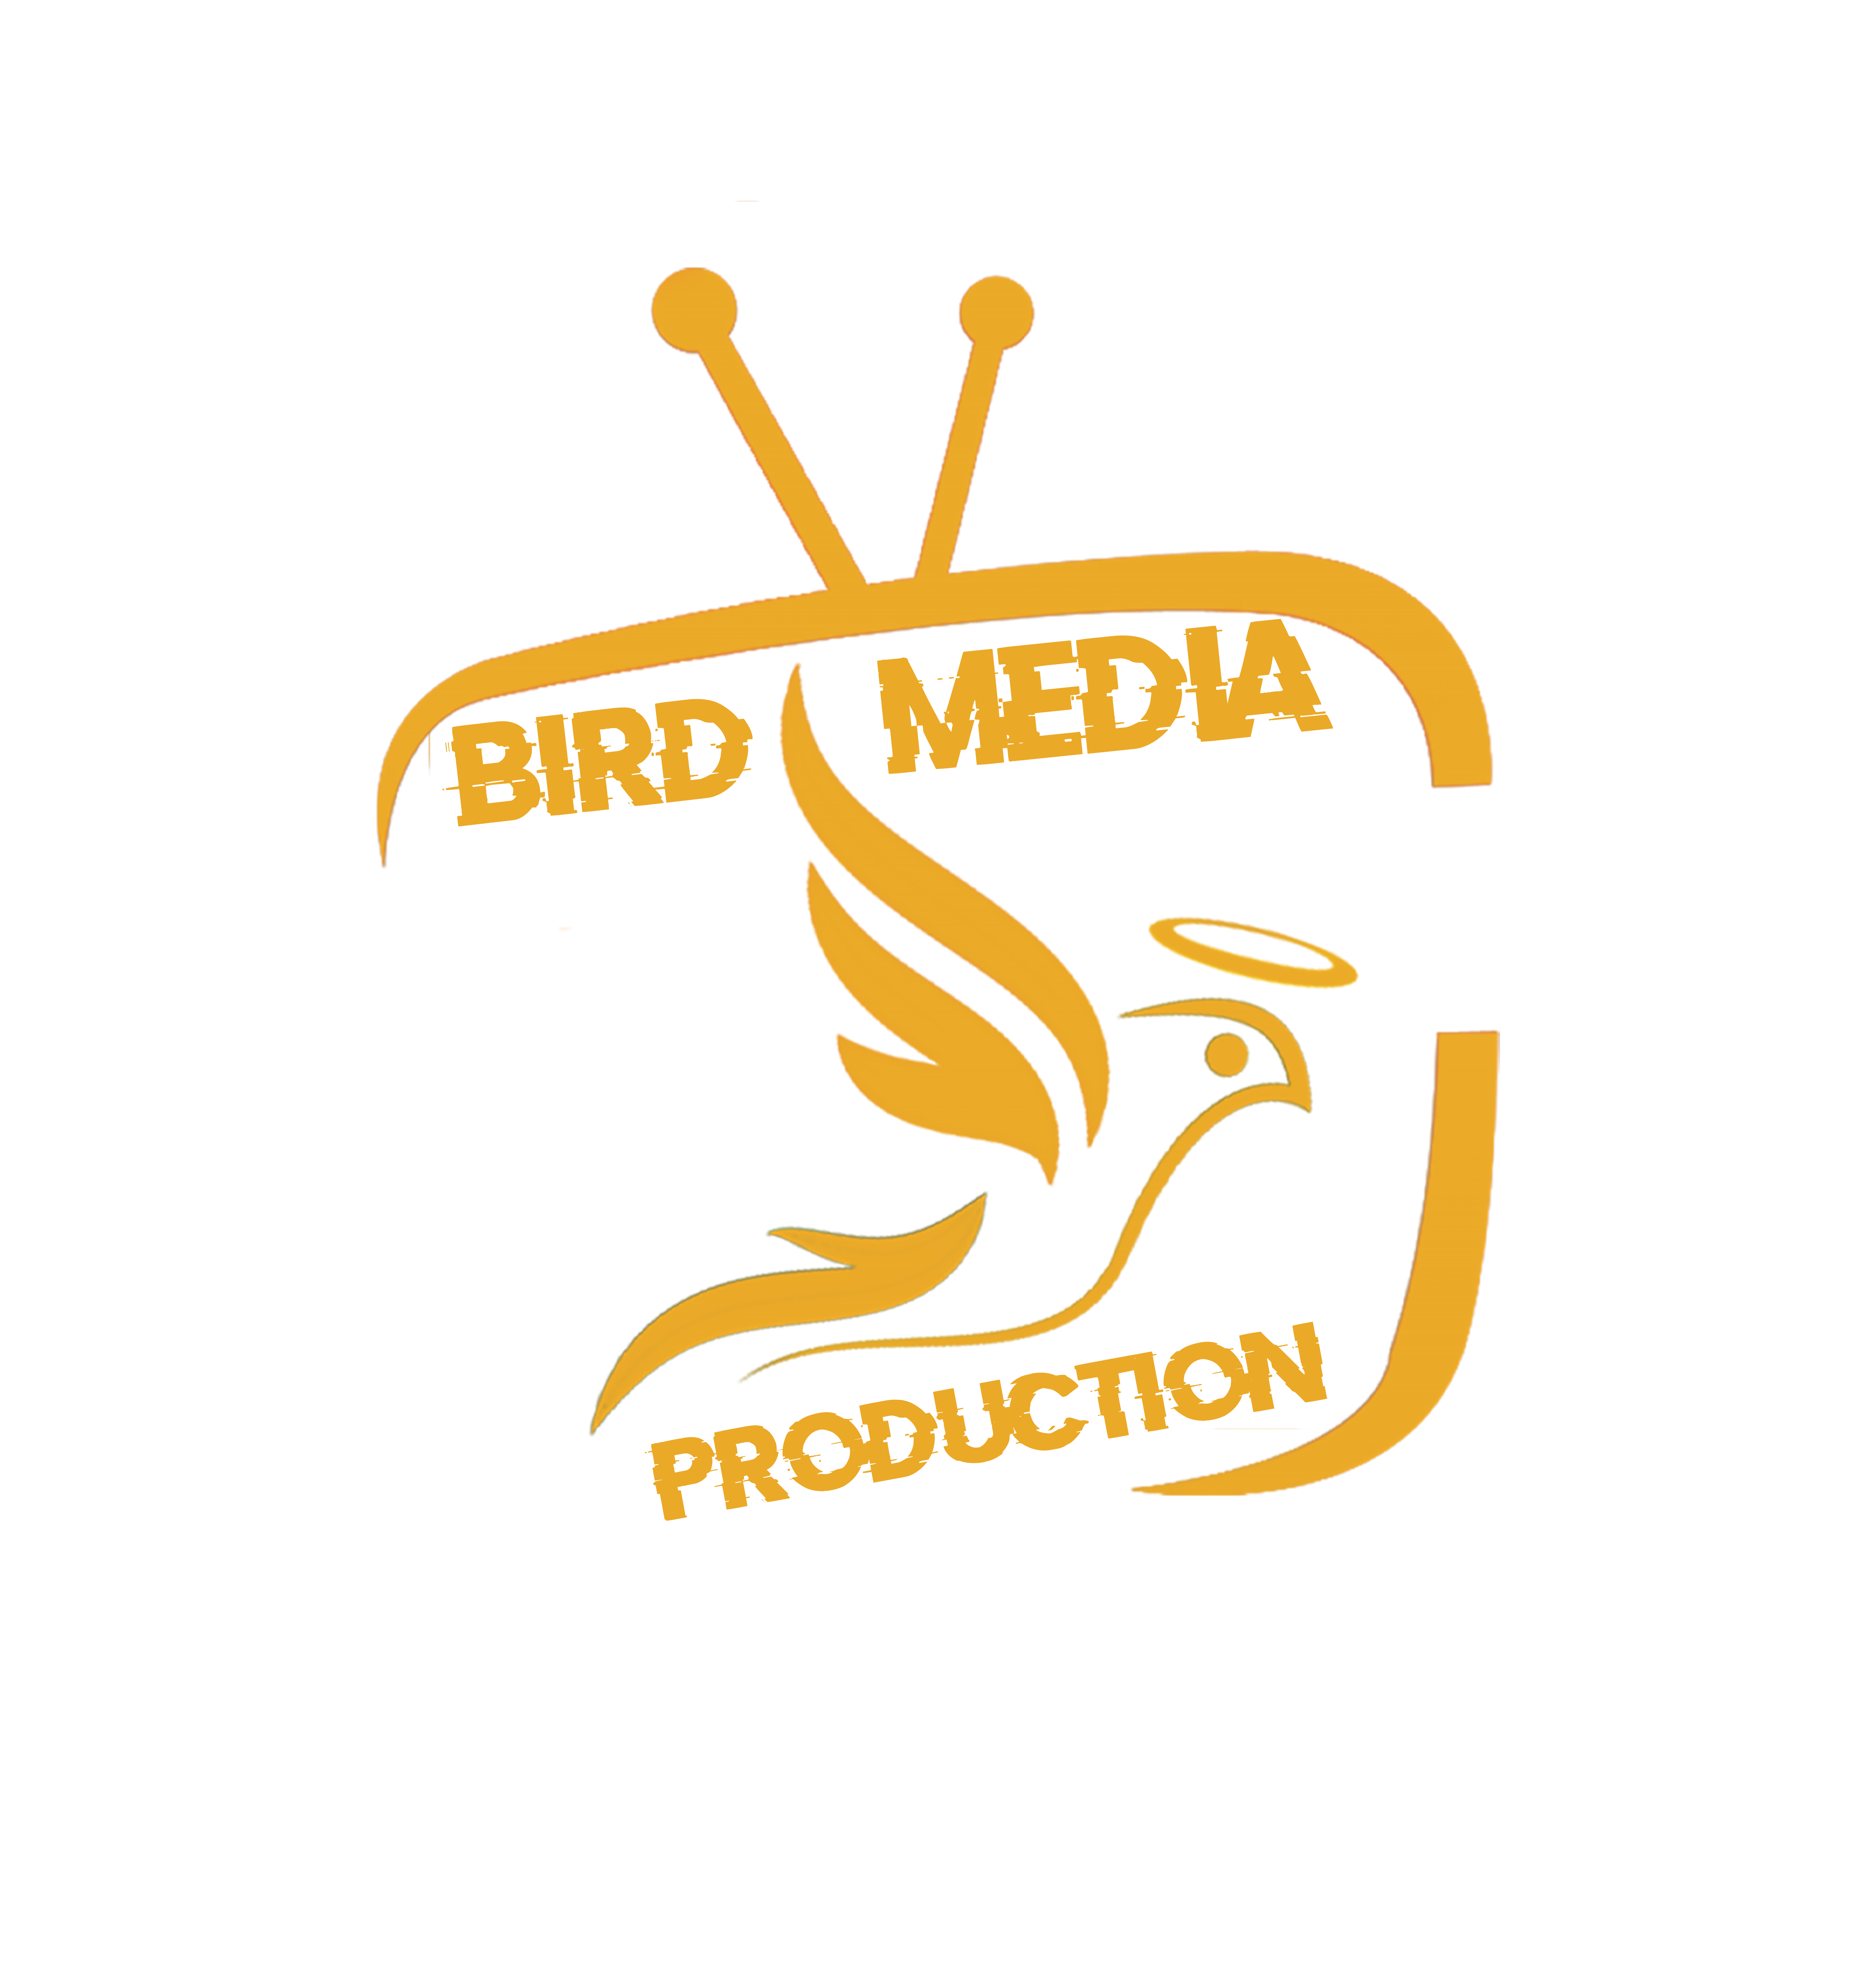 Bird Media Production